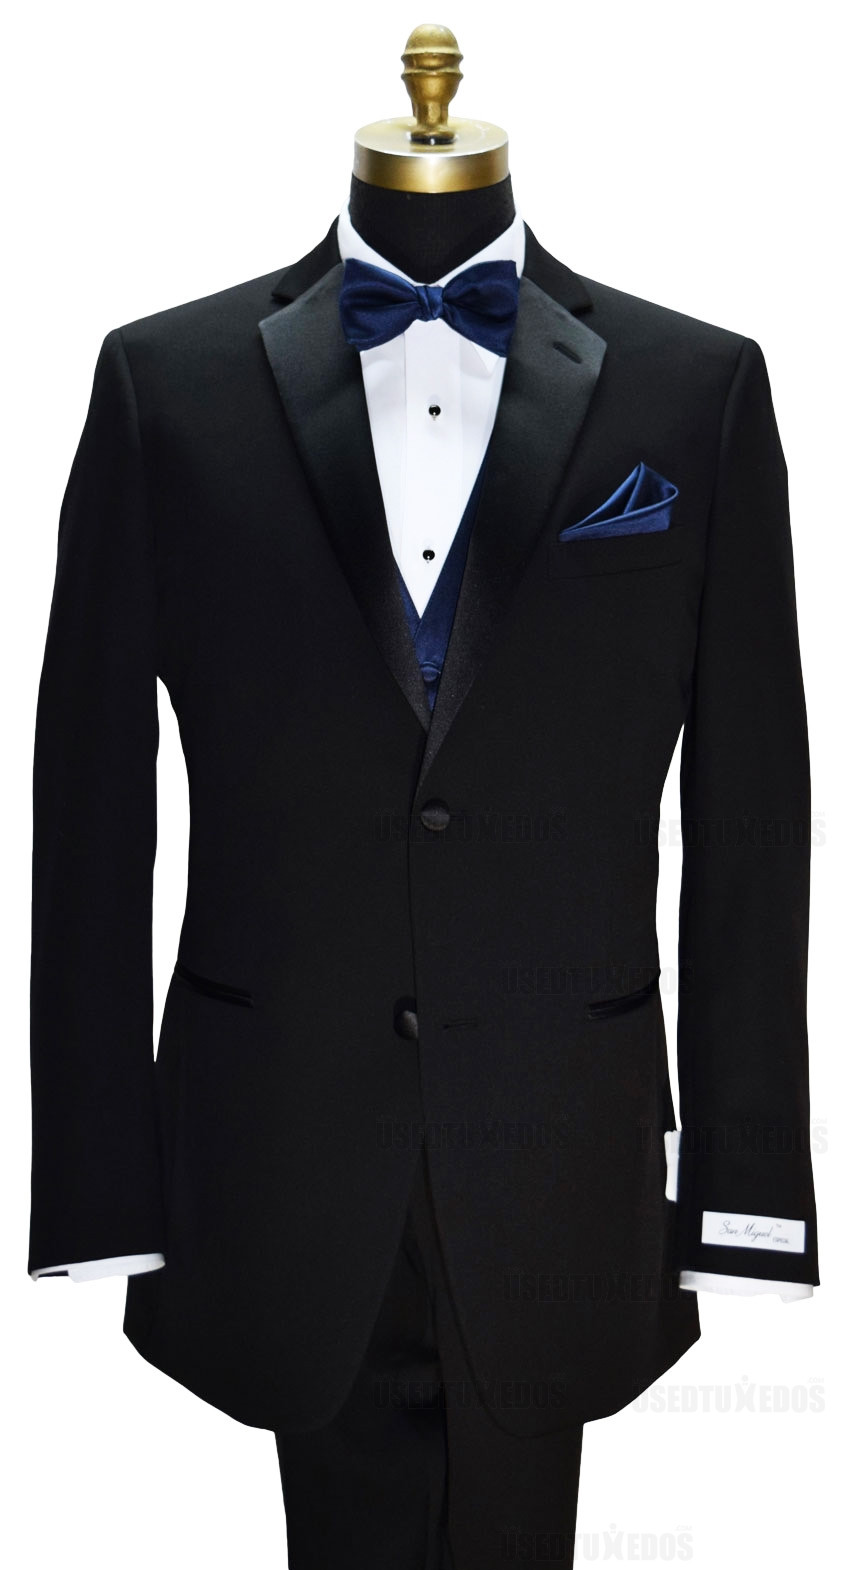 2 button black notch lapel tuxedo with navy blue vest and bowtie on tuxbling.com